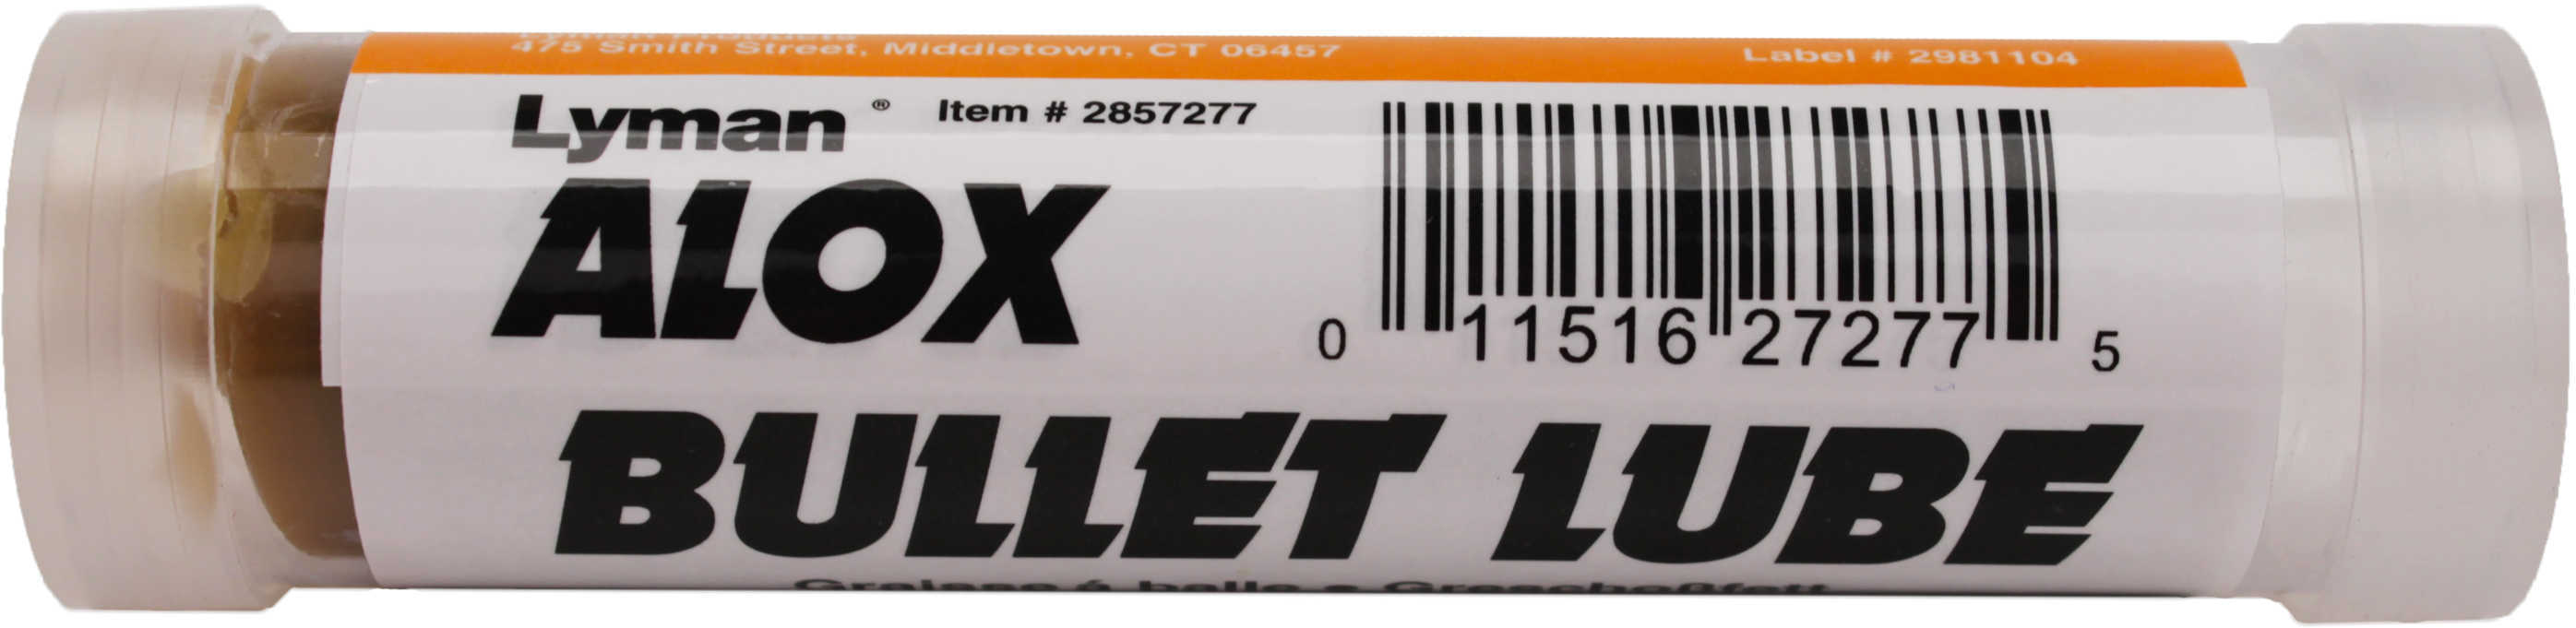 Lyman ALOX Bullet Lubricant 1.25 Oz. Stick